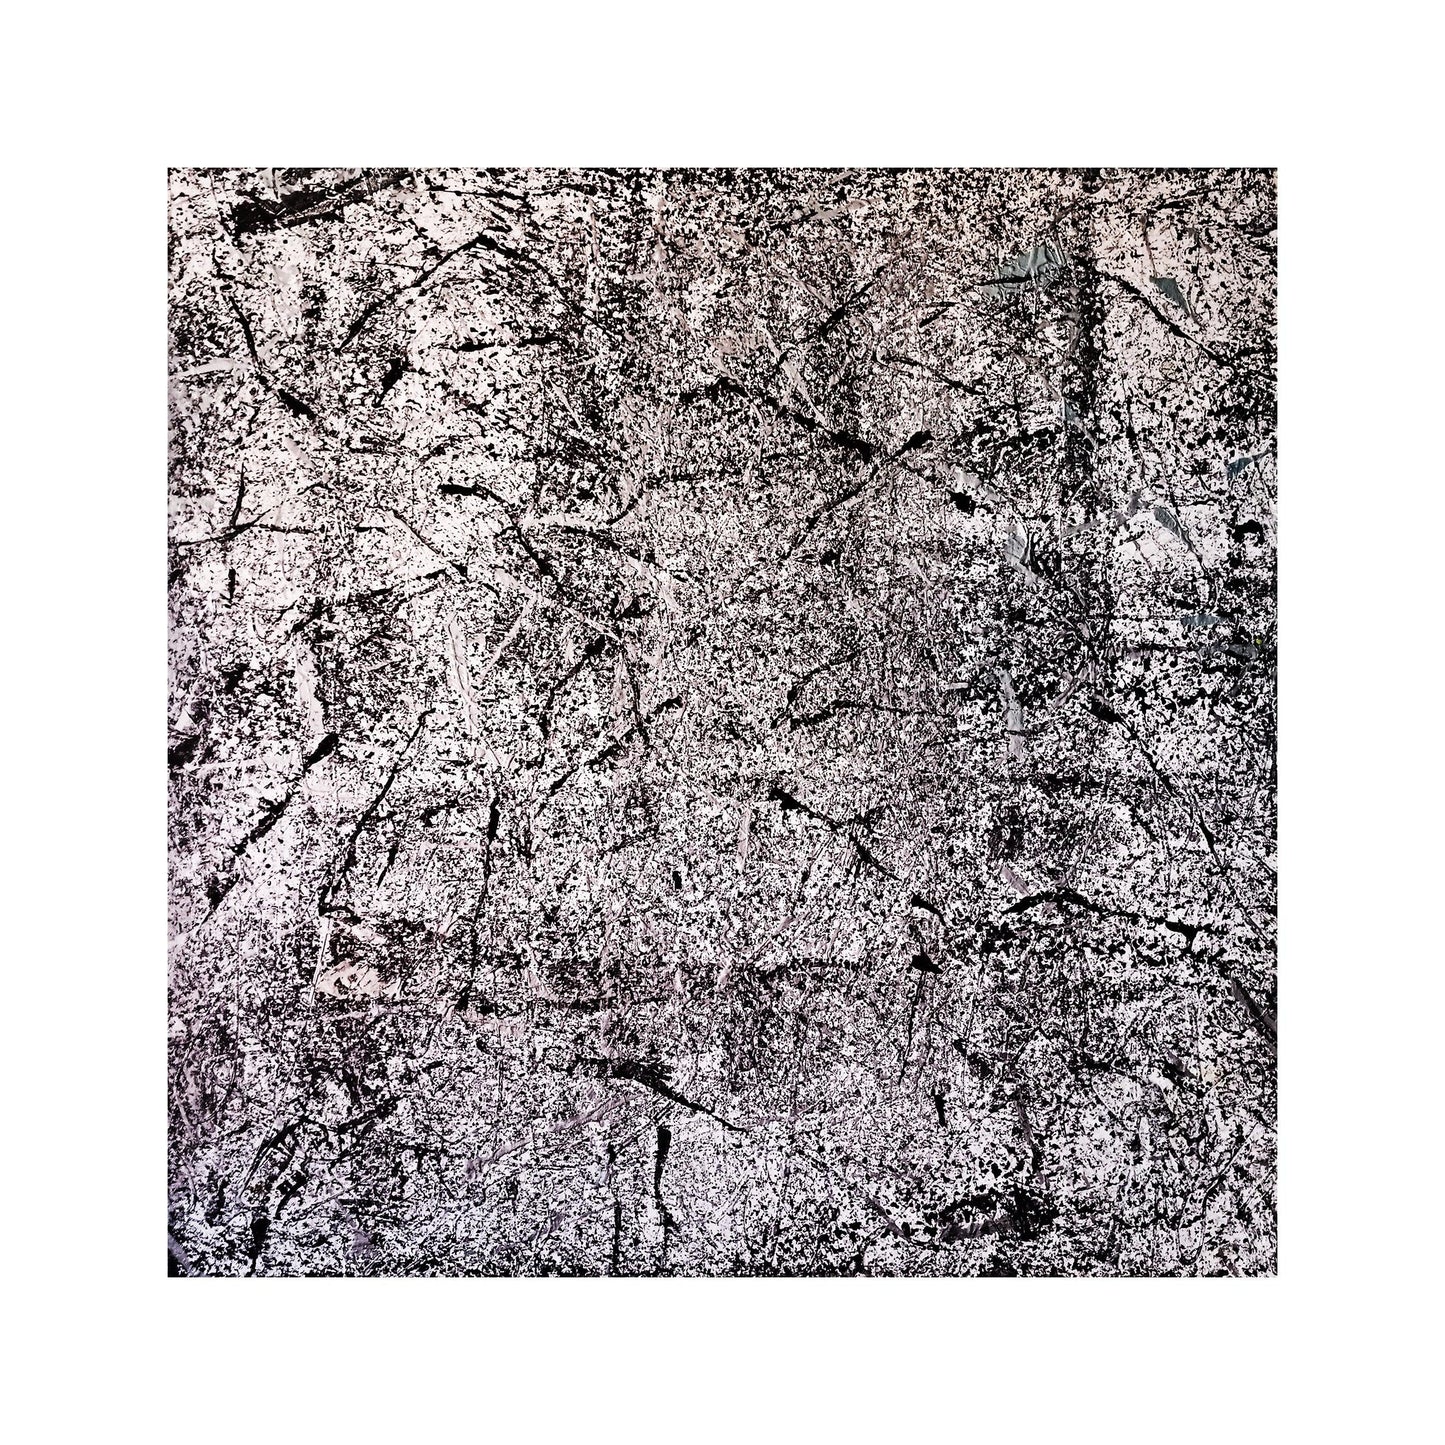 Silver Lining 30"x30" - Anirbas Art